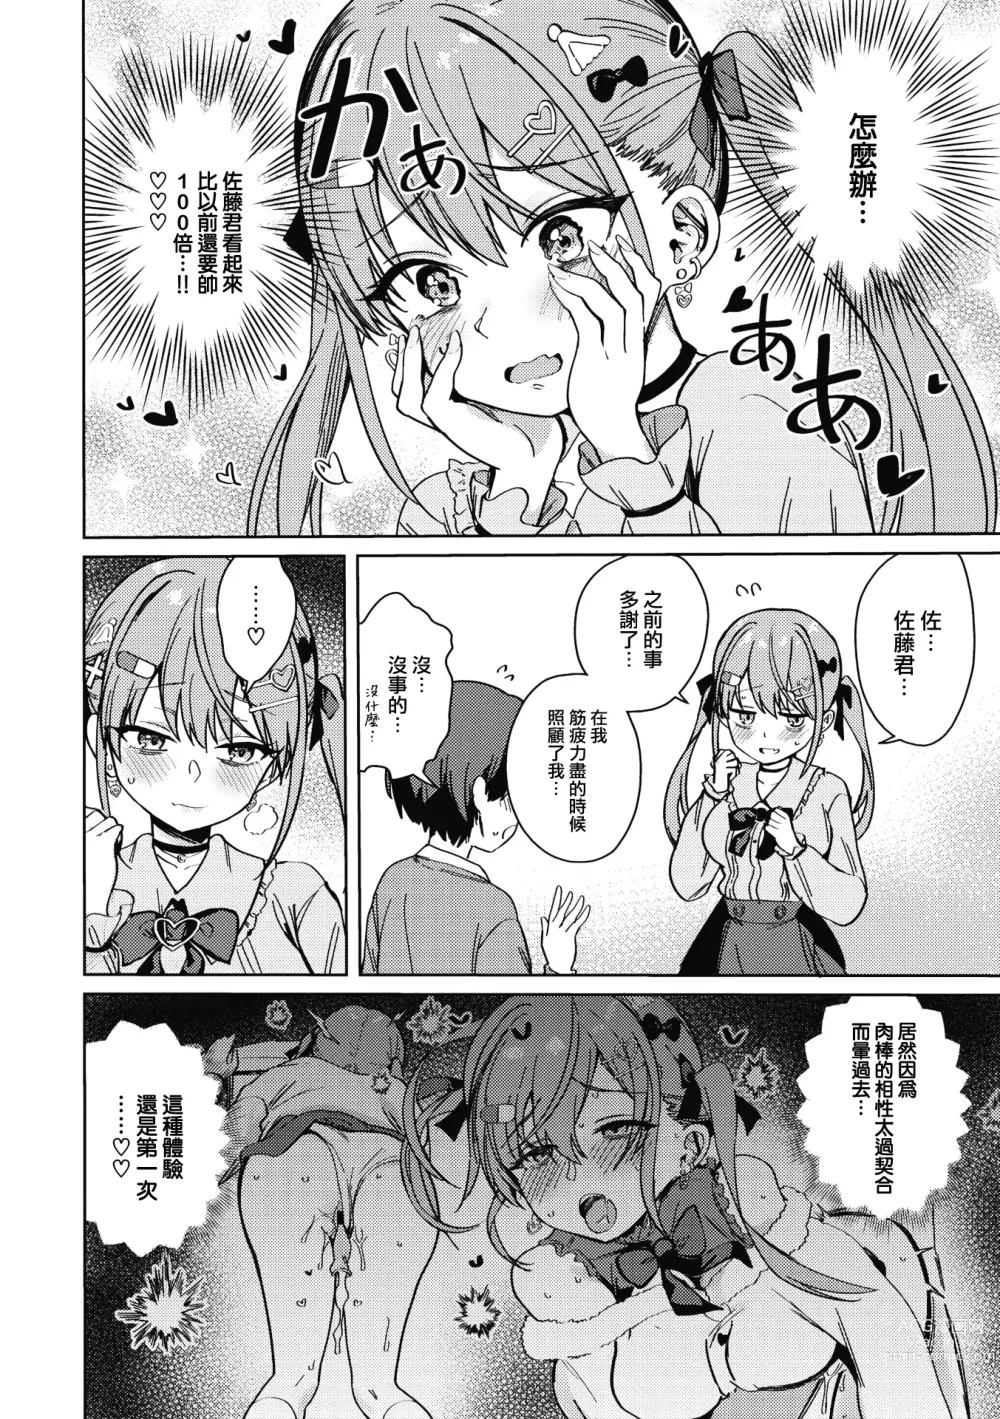 Page 11 of manga Best Match Mine Girl